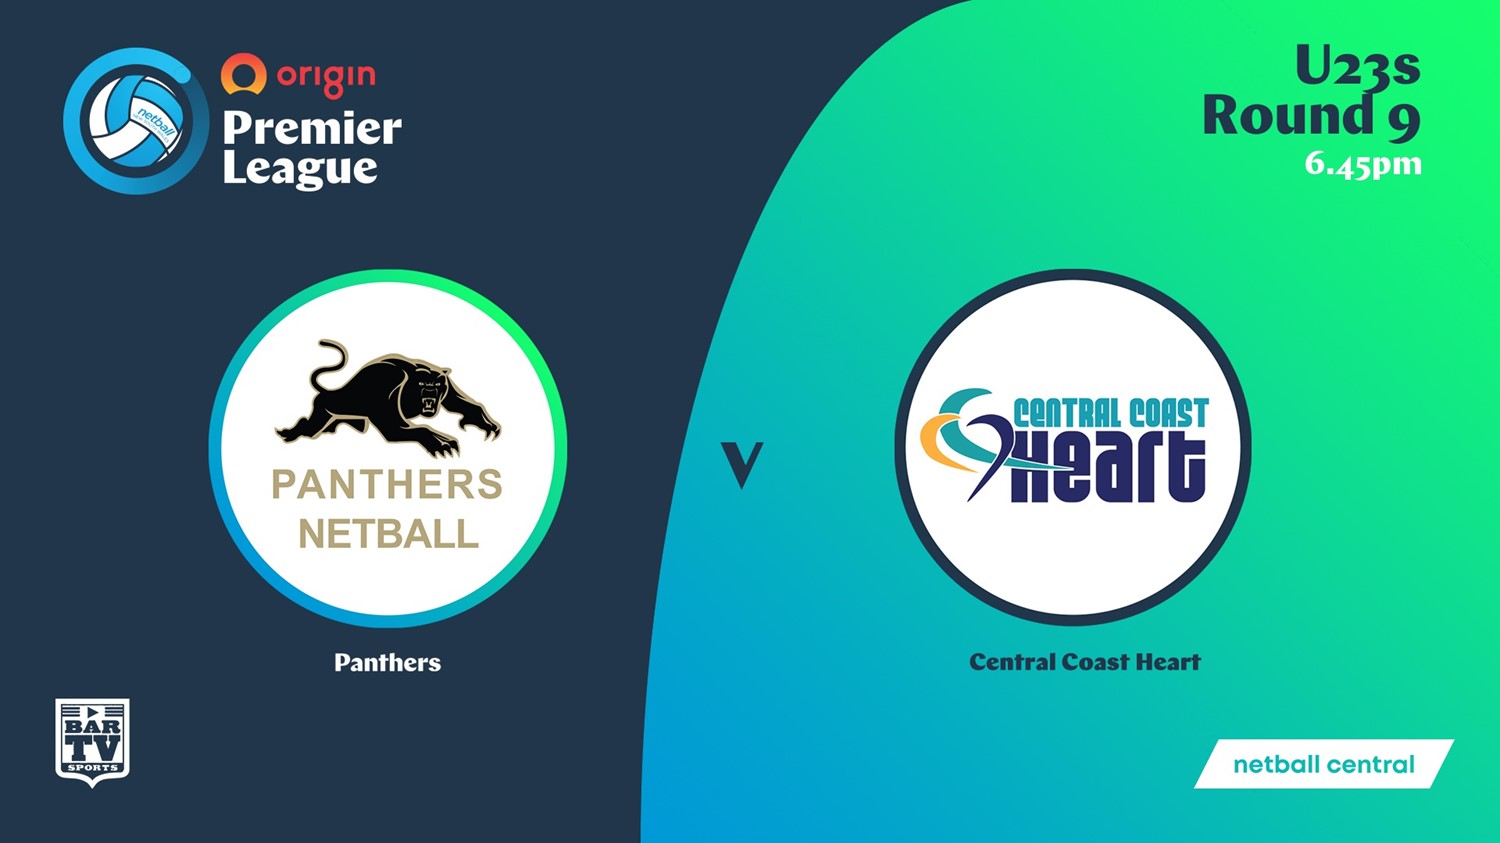 NSW Prem League Round 9 - U23s - Panthers v Central Coast Heart Minigame Slate Image